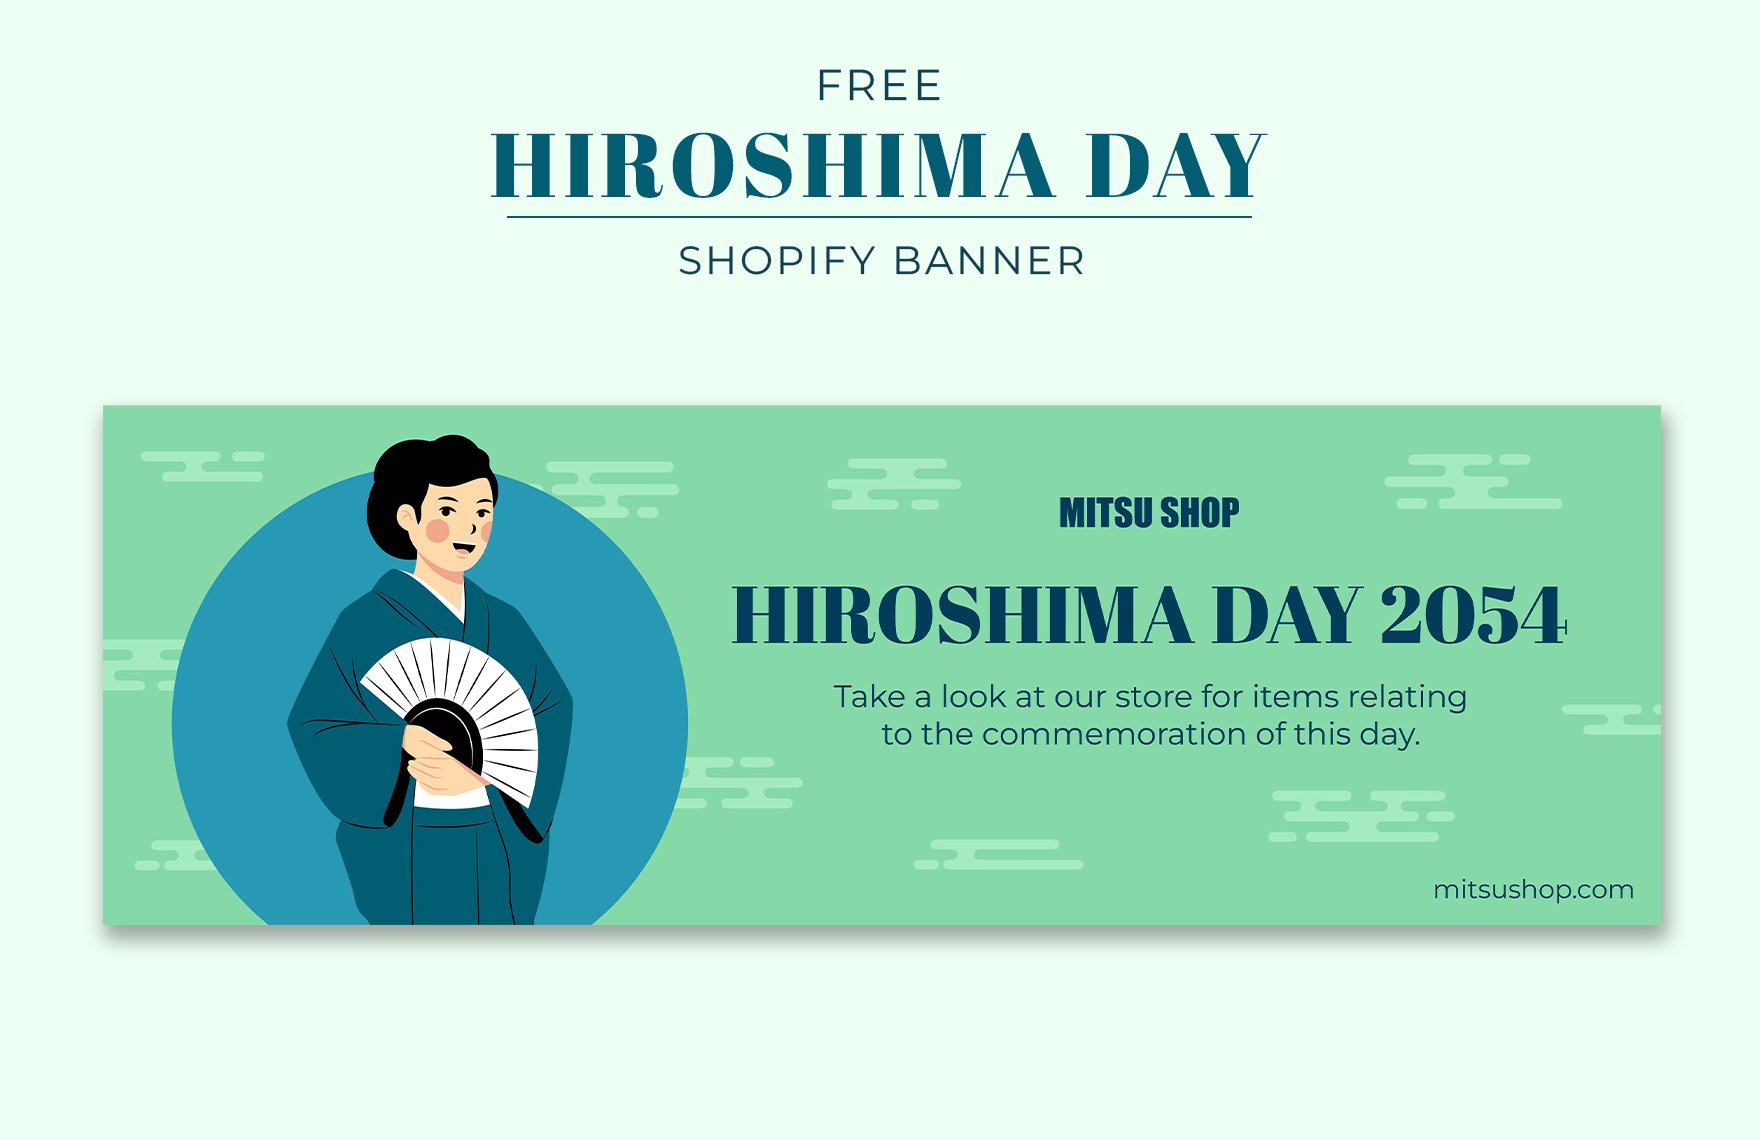 Hiroshima Day Shopify Banner in PDF, Illustrator, SVG, JPG